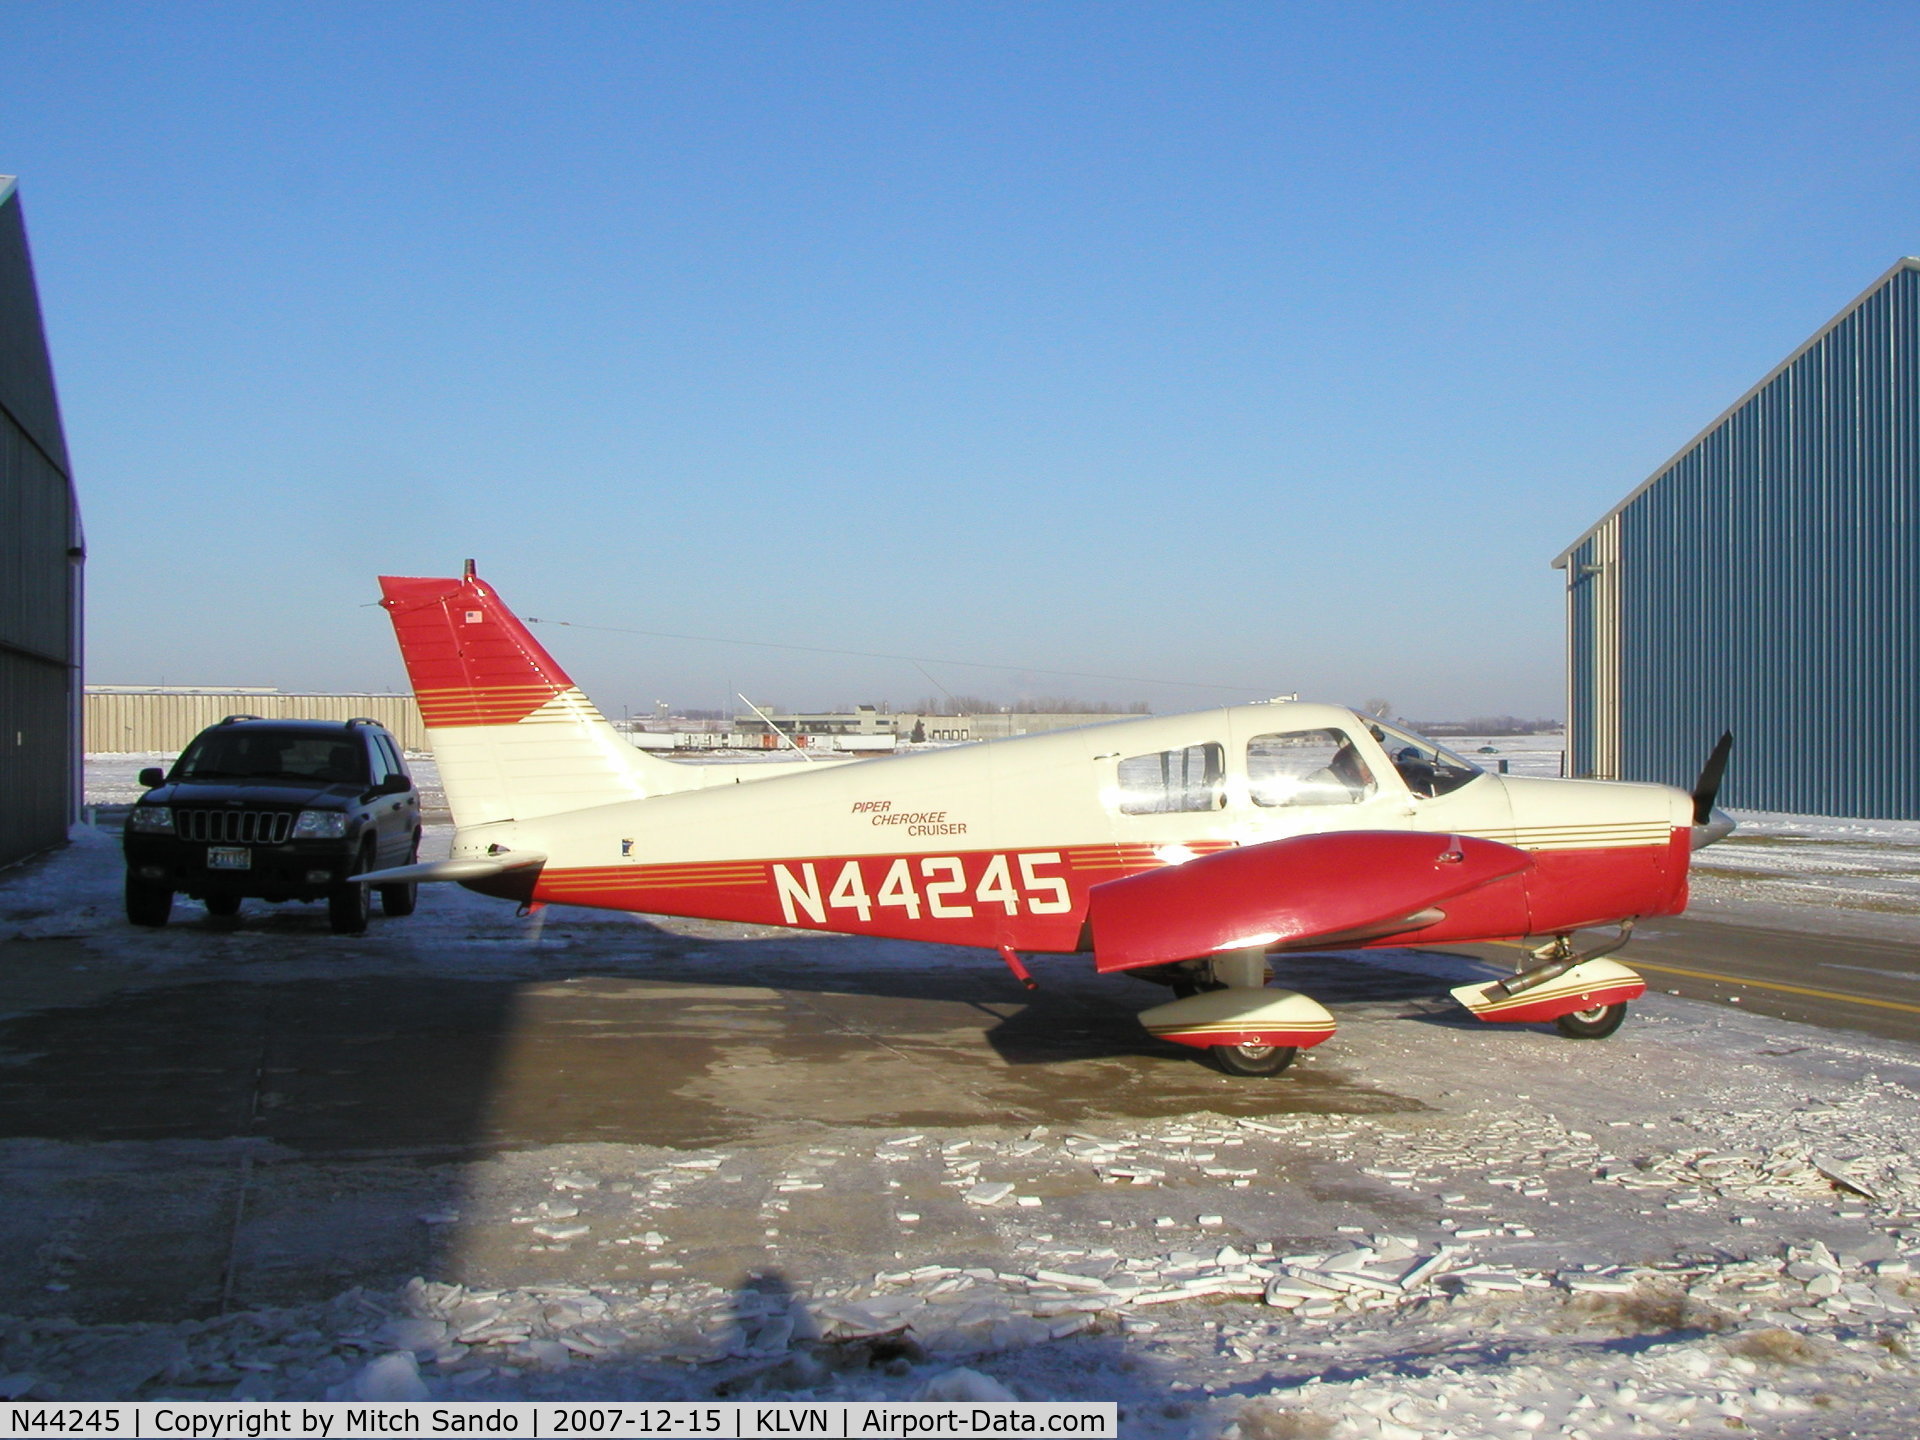 N44245, 1974 Piper PA-28-140 Cherokee Cruiser C/N 28-7425397, Parked outside the hangar.